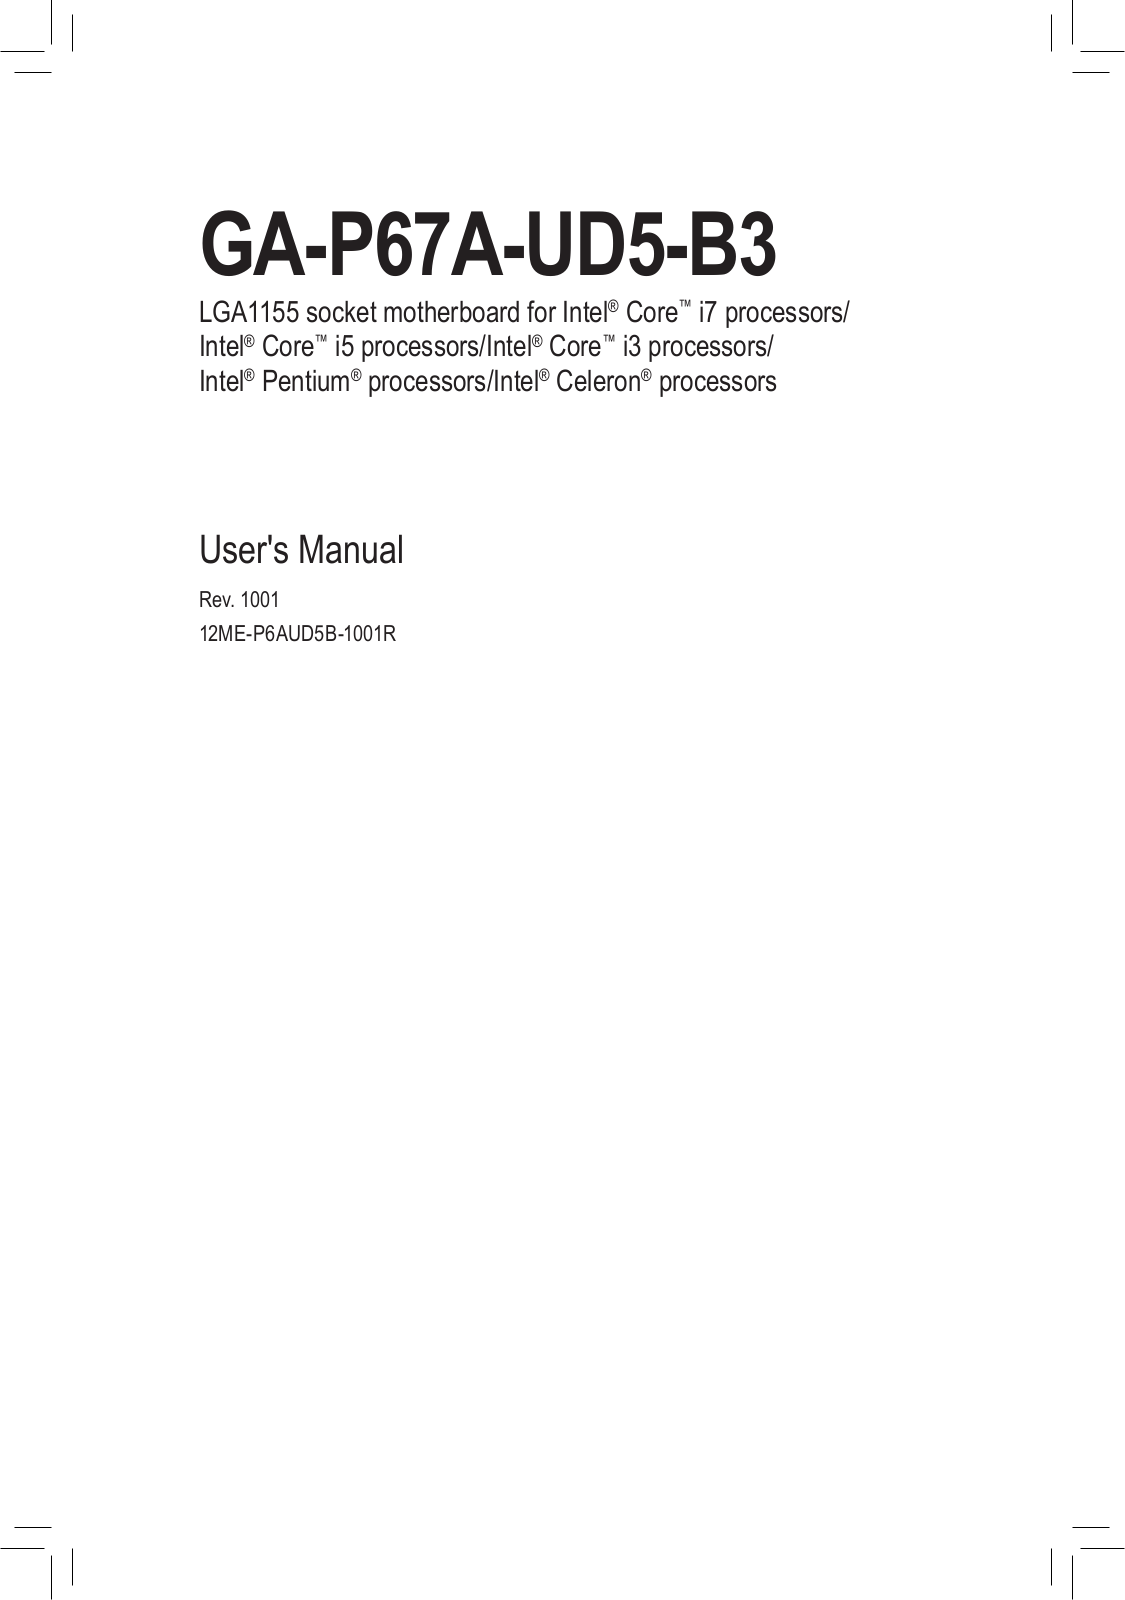 Gigabyte GA-P67A-UD5-B3 (rev. 1.0) User Manual